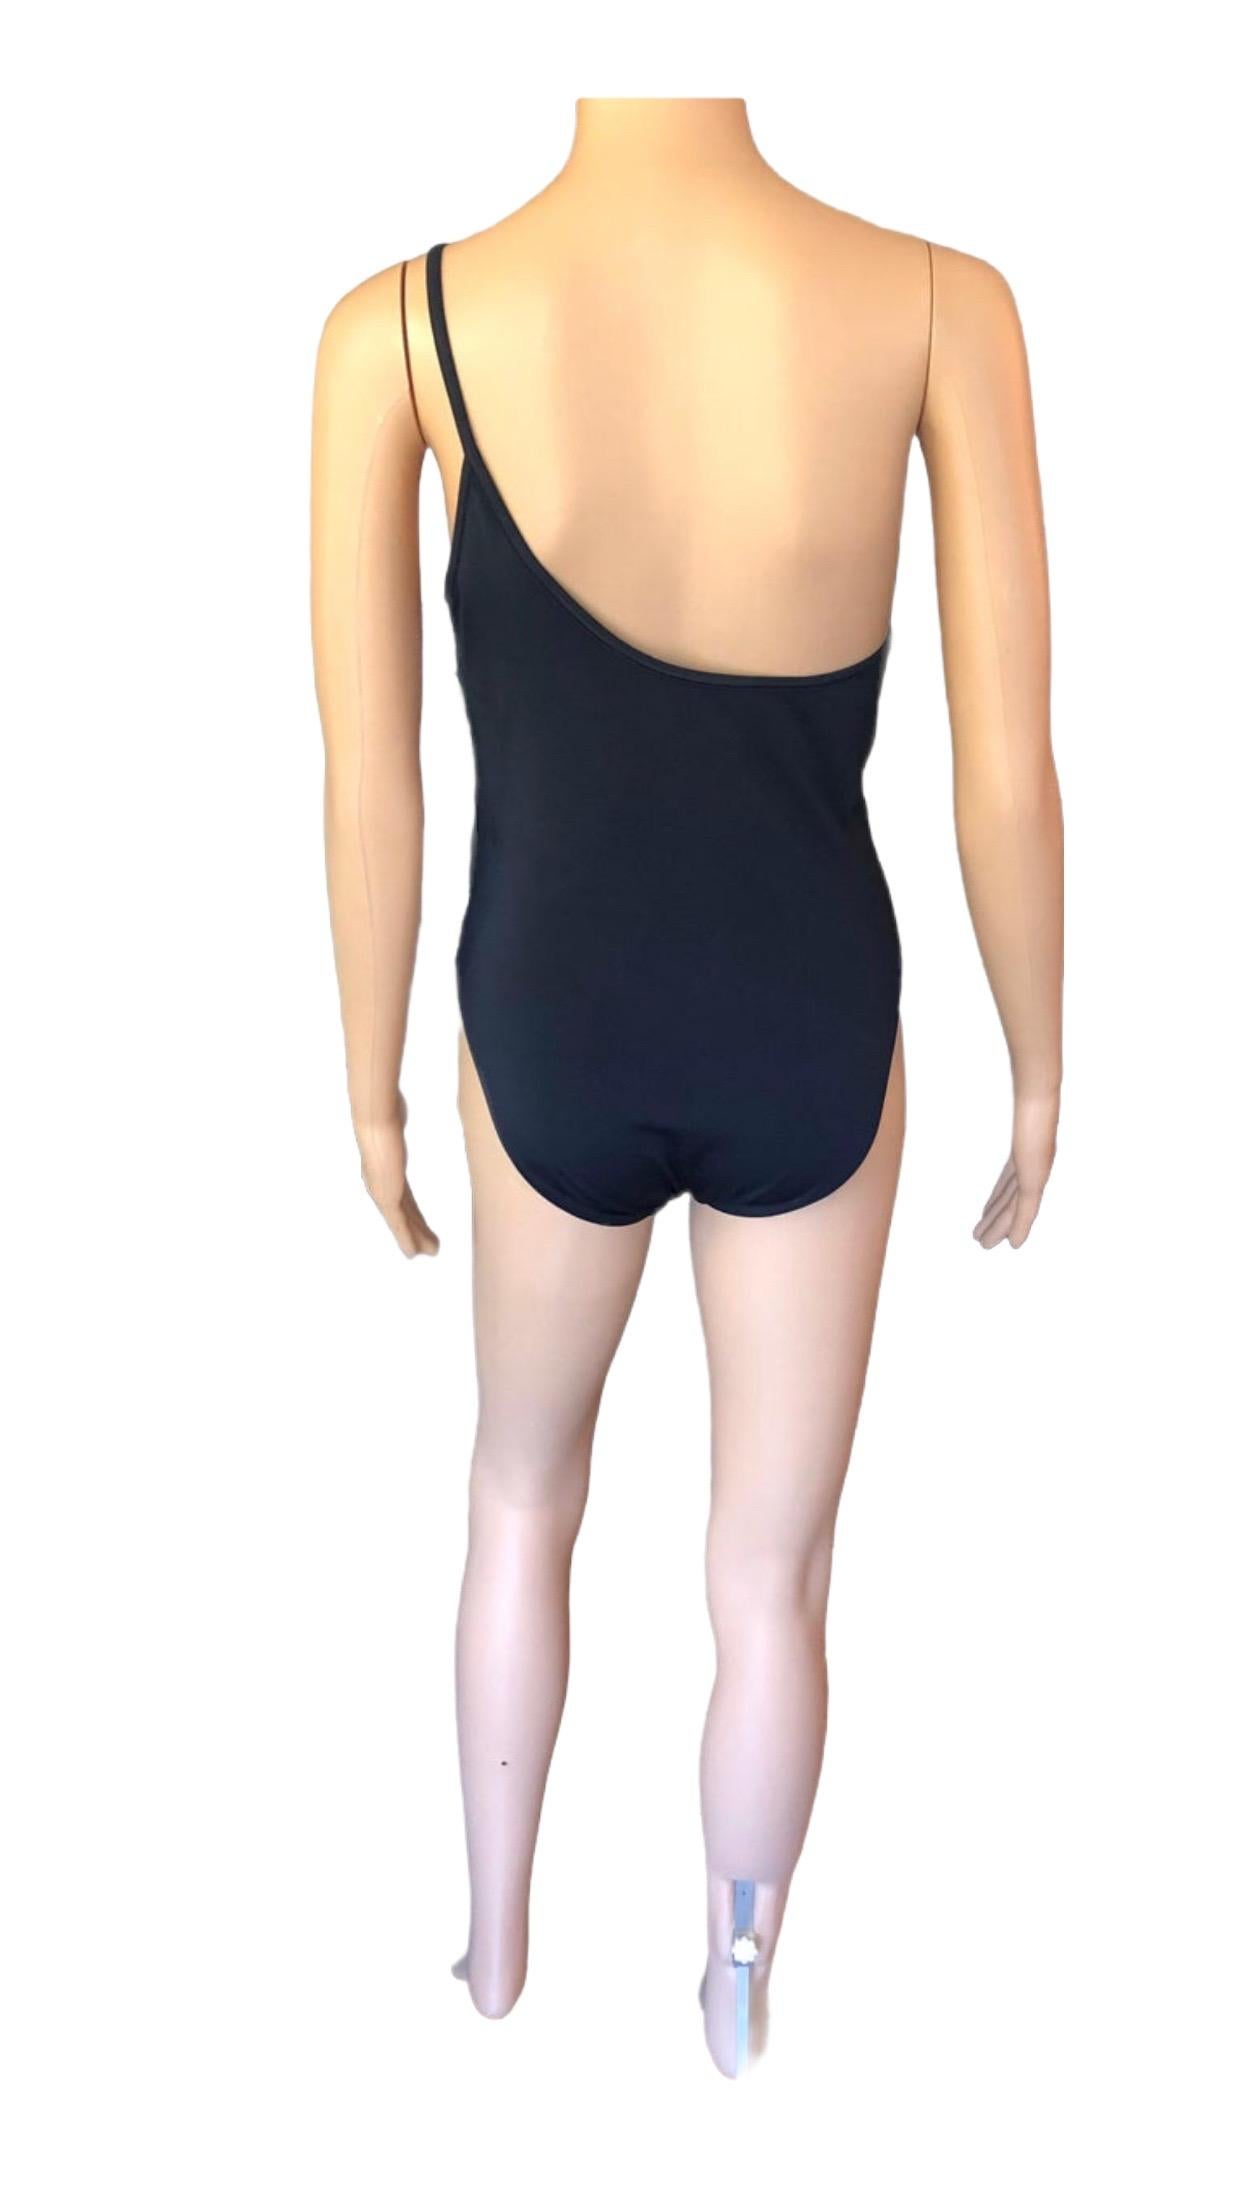 Tom Ford for Gucci S/S 1998 Runway G Logo One Shoulder Black Bodysuit Swimsuit  7